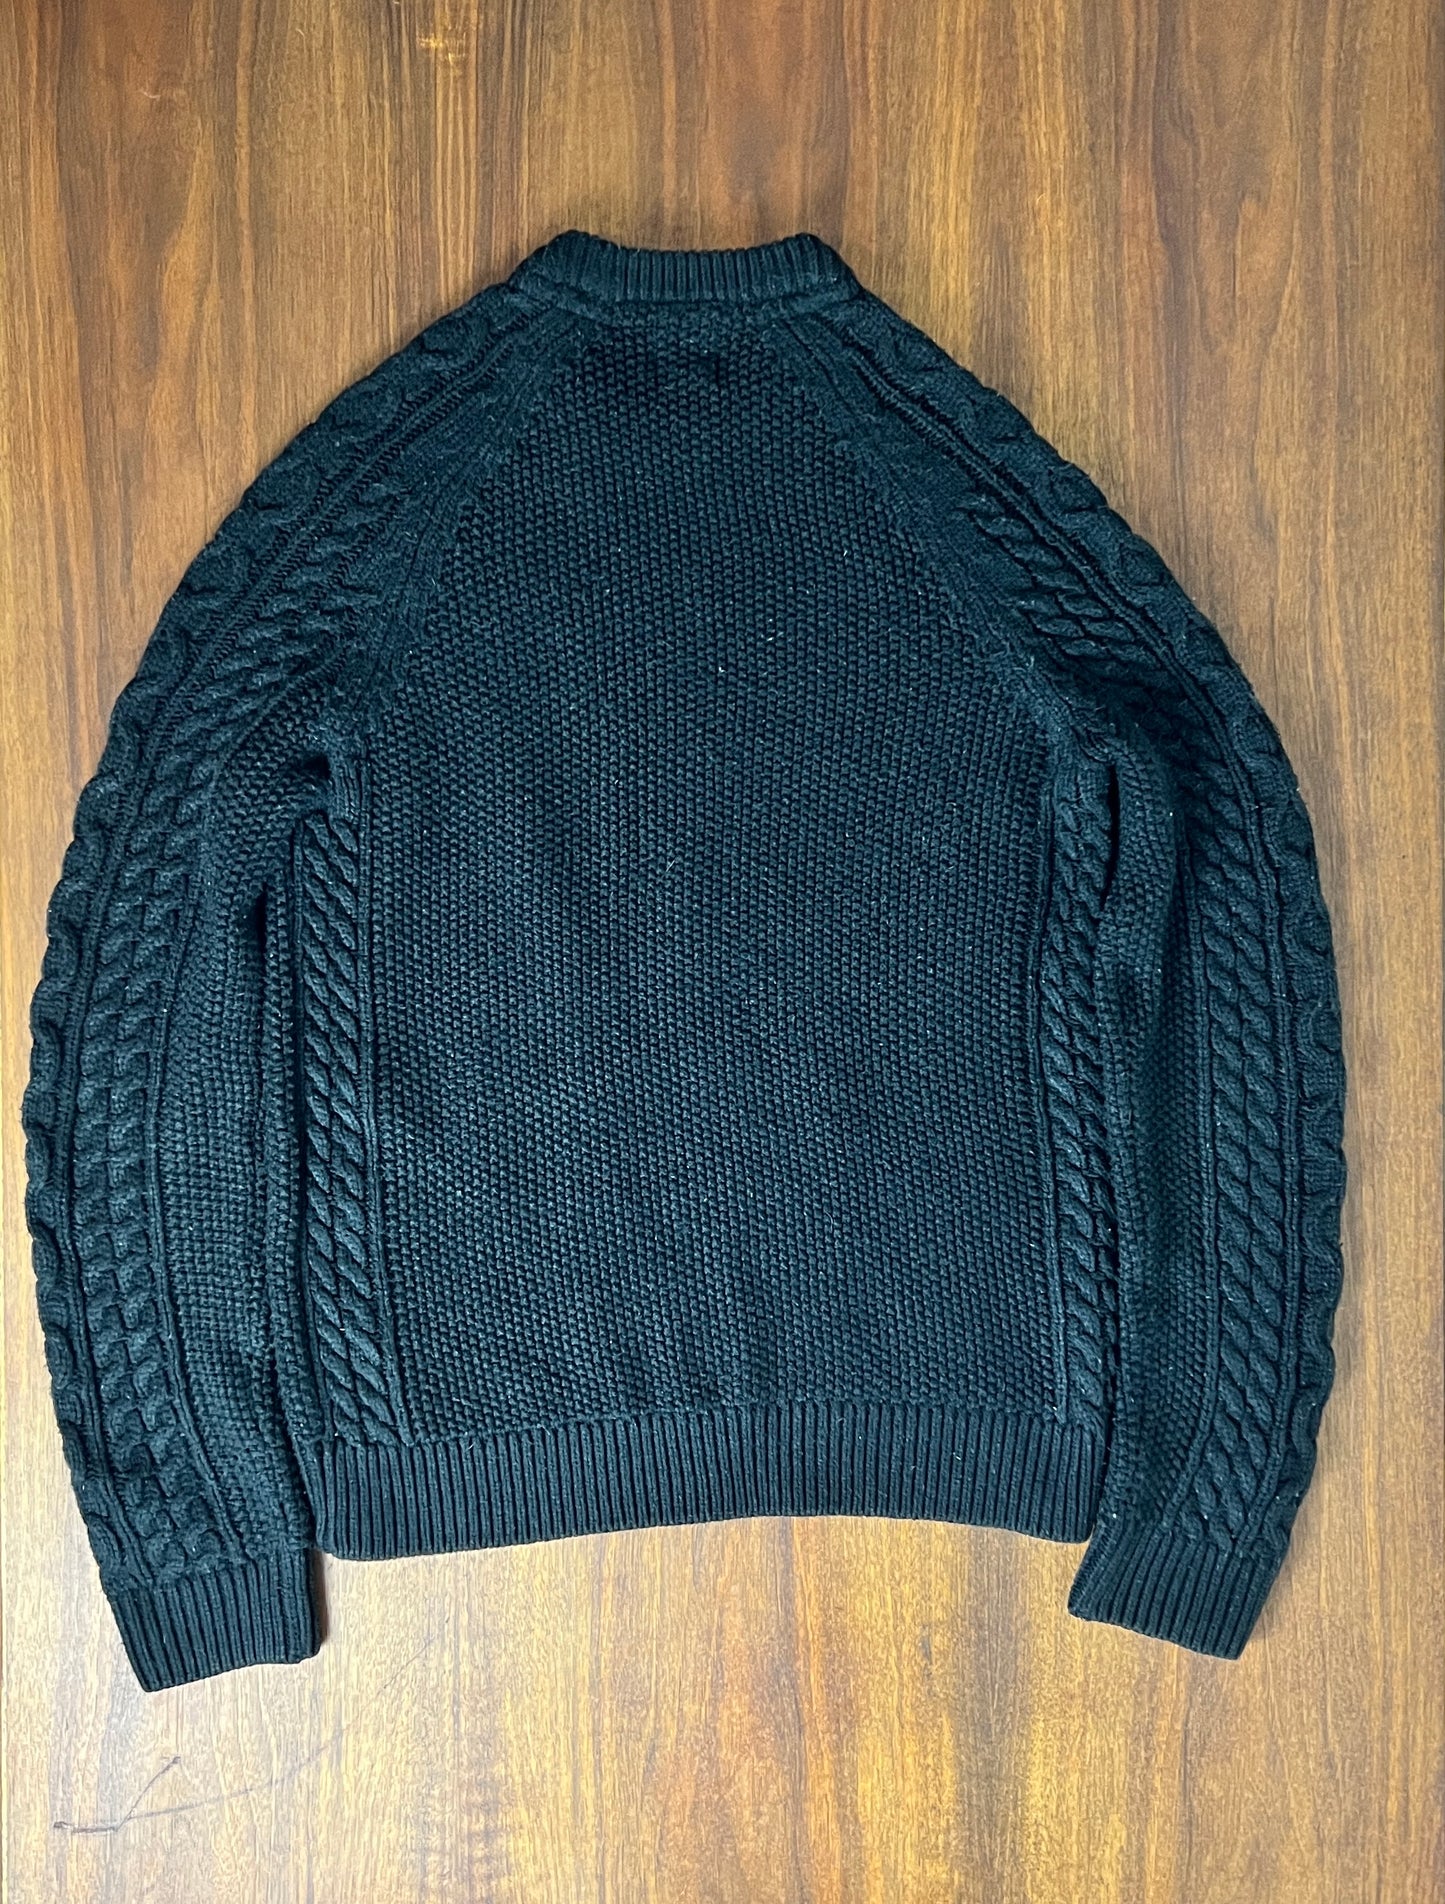 The Black Fisherman Sweater